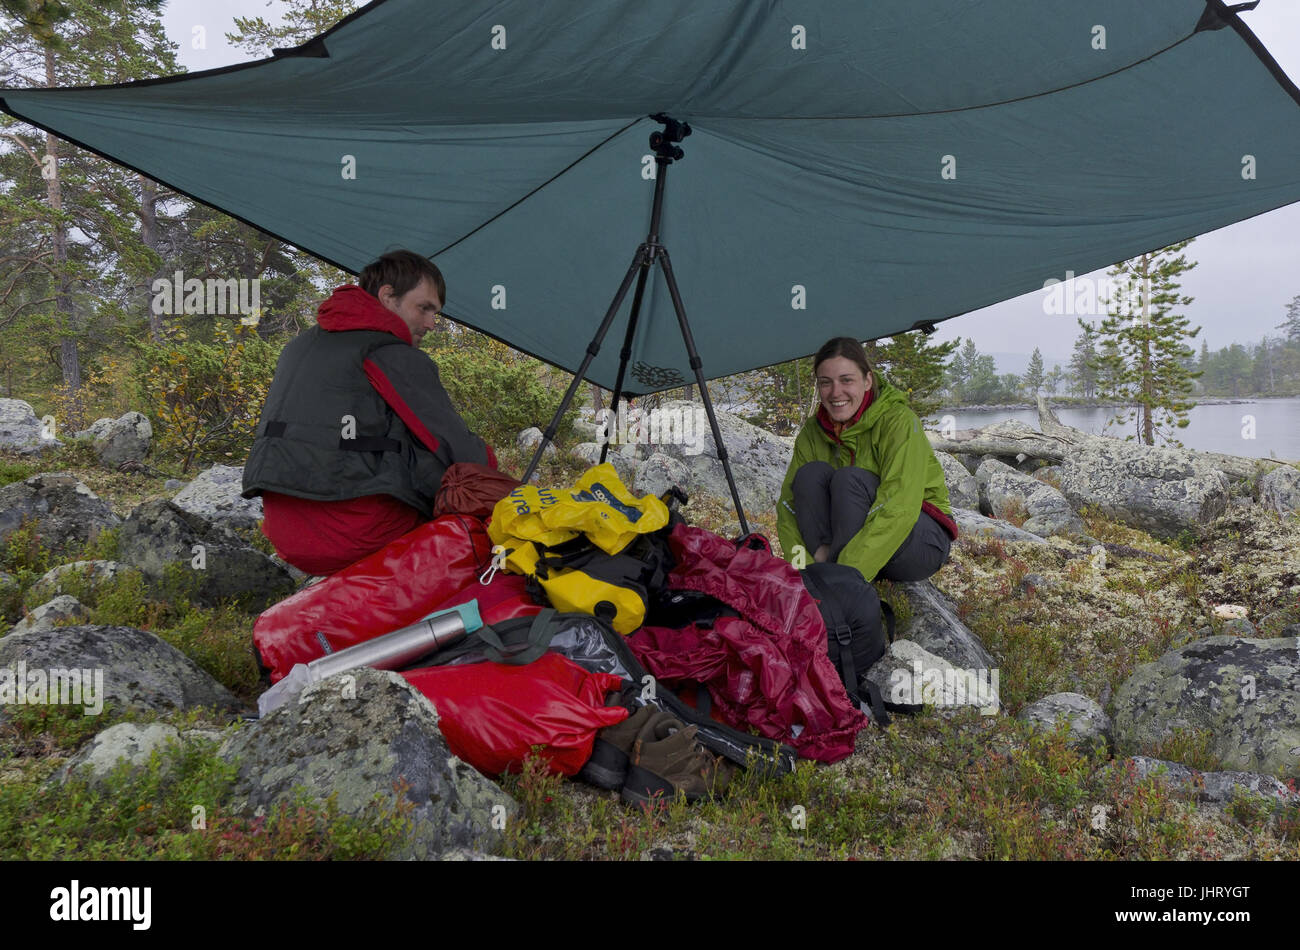 Tent tarpaulin -Fotos und -Bildmaterial in hoher Auflösung – Alamy